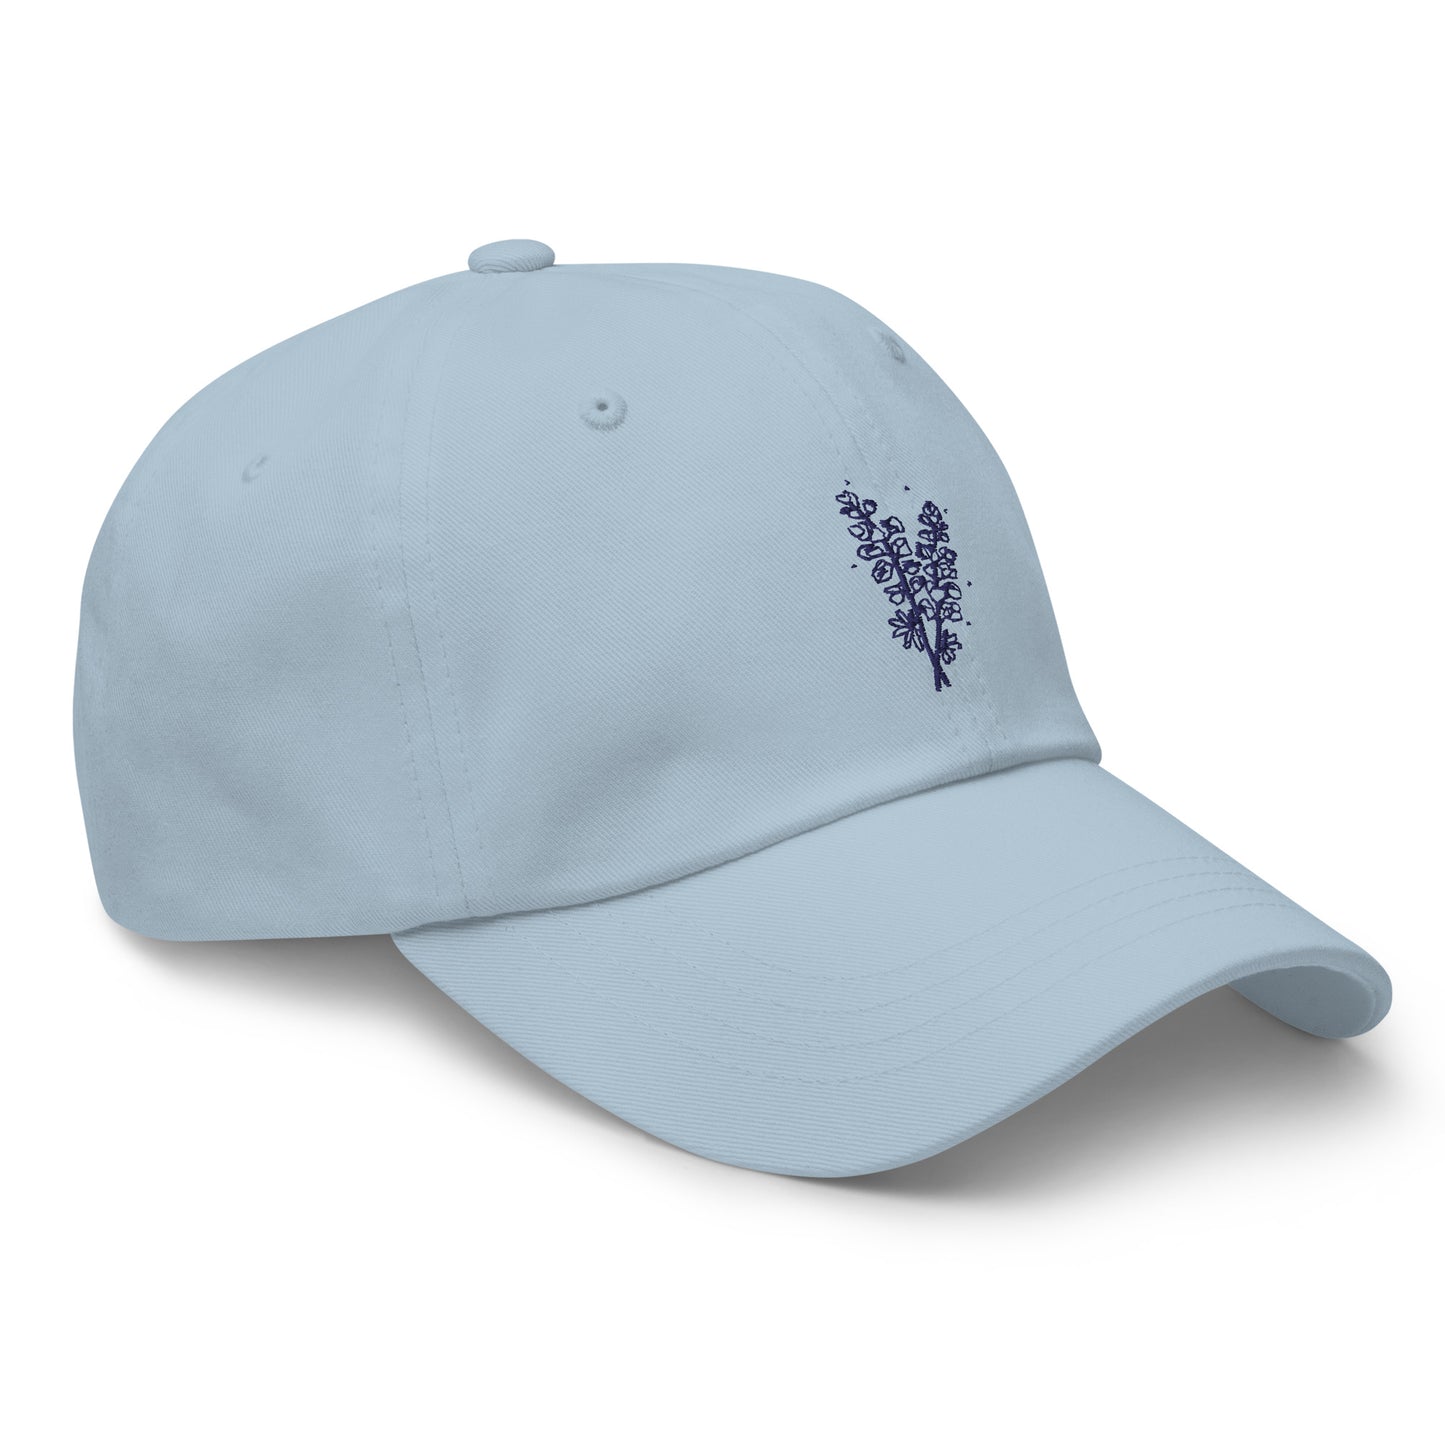 Bluebonnet Embroidered Hat (2 colors)